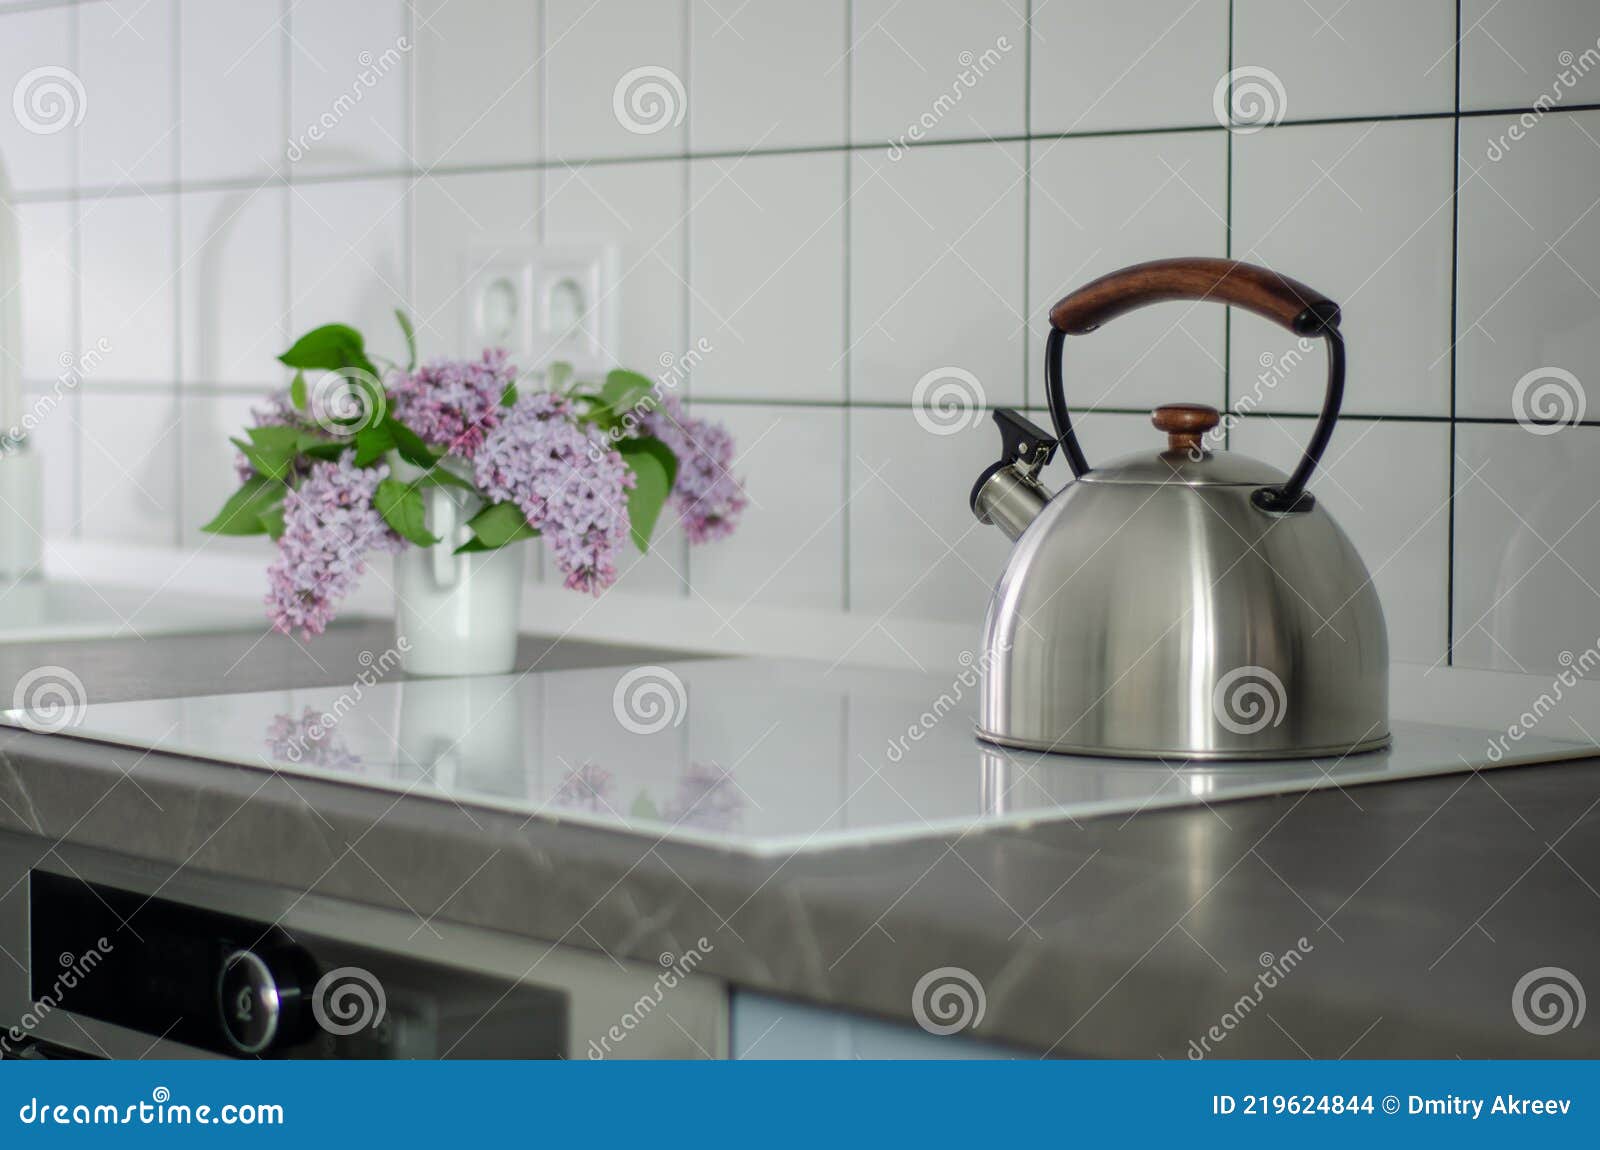 https://thumbs.dreamstime.com/z/steel-kettle-modern-kitchen-induction-stove-219624844.jpg